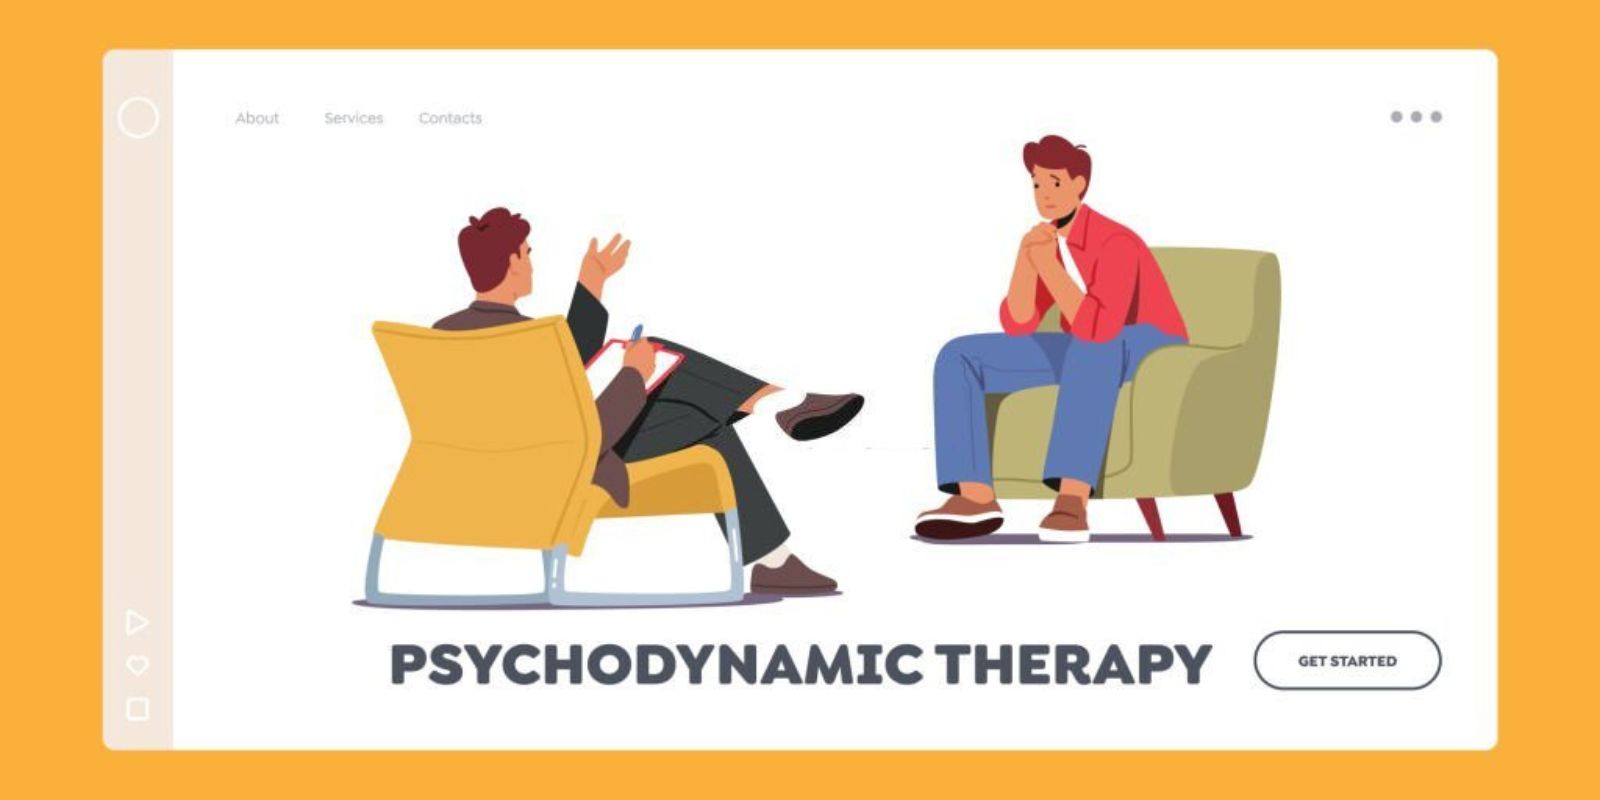 Benefits of Psychodynamic Therapy